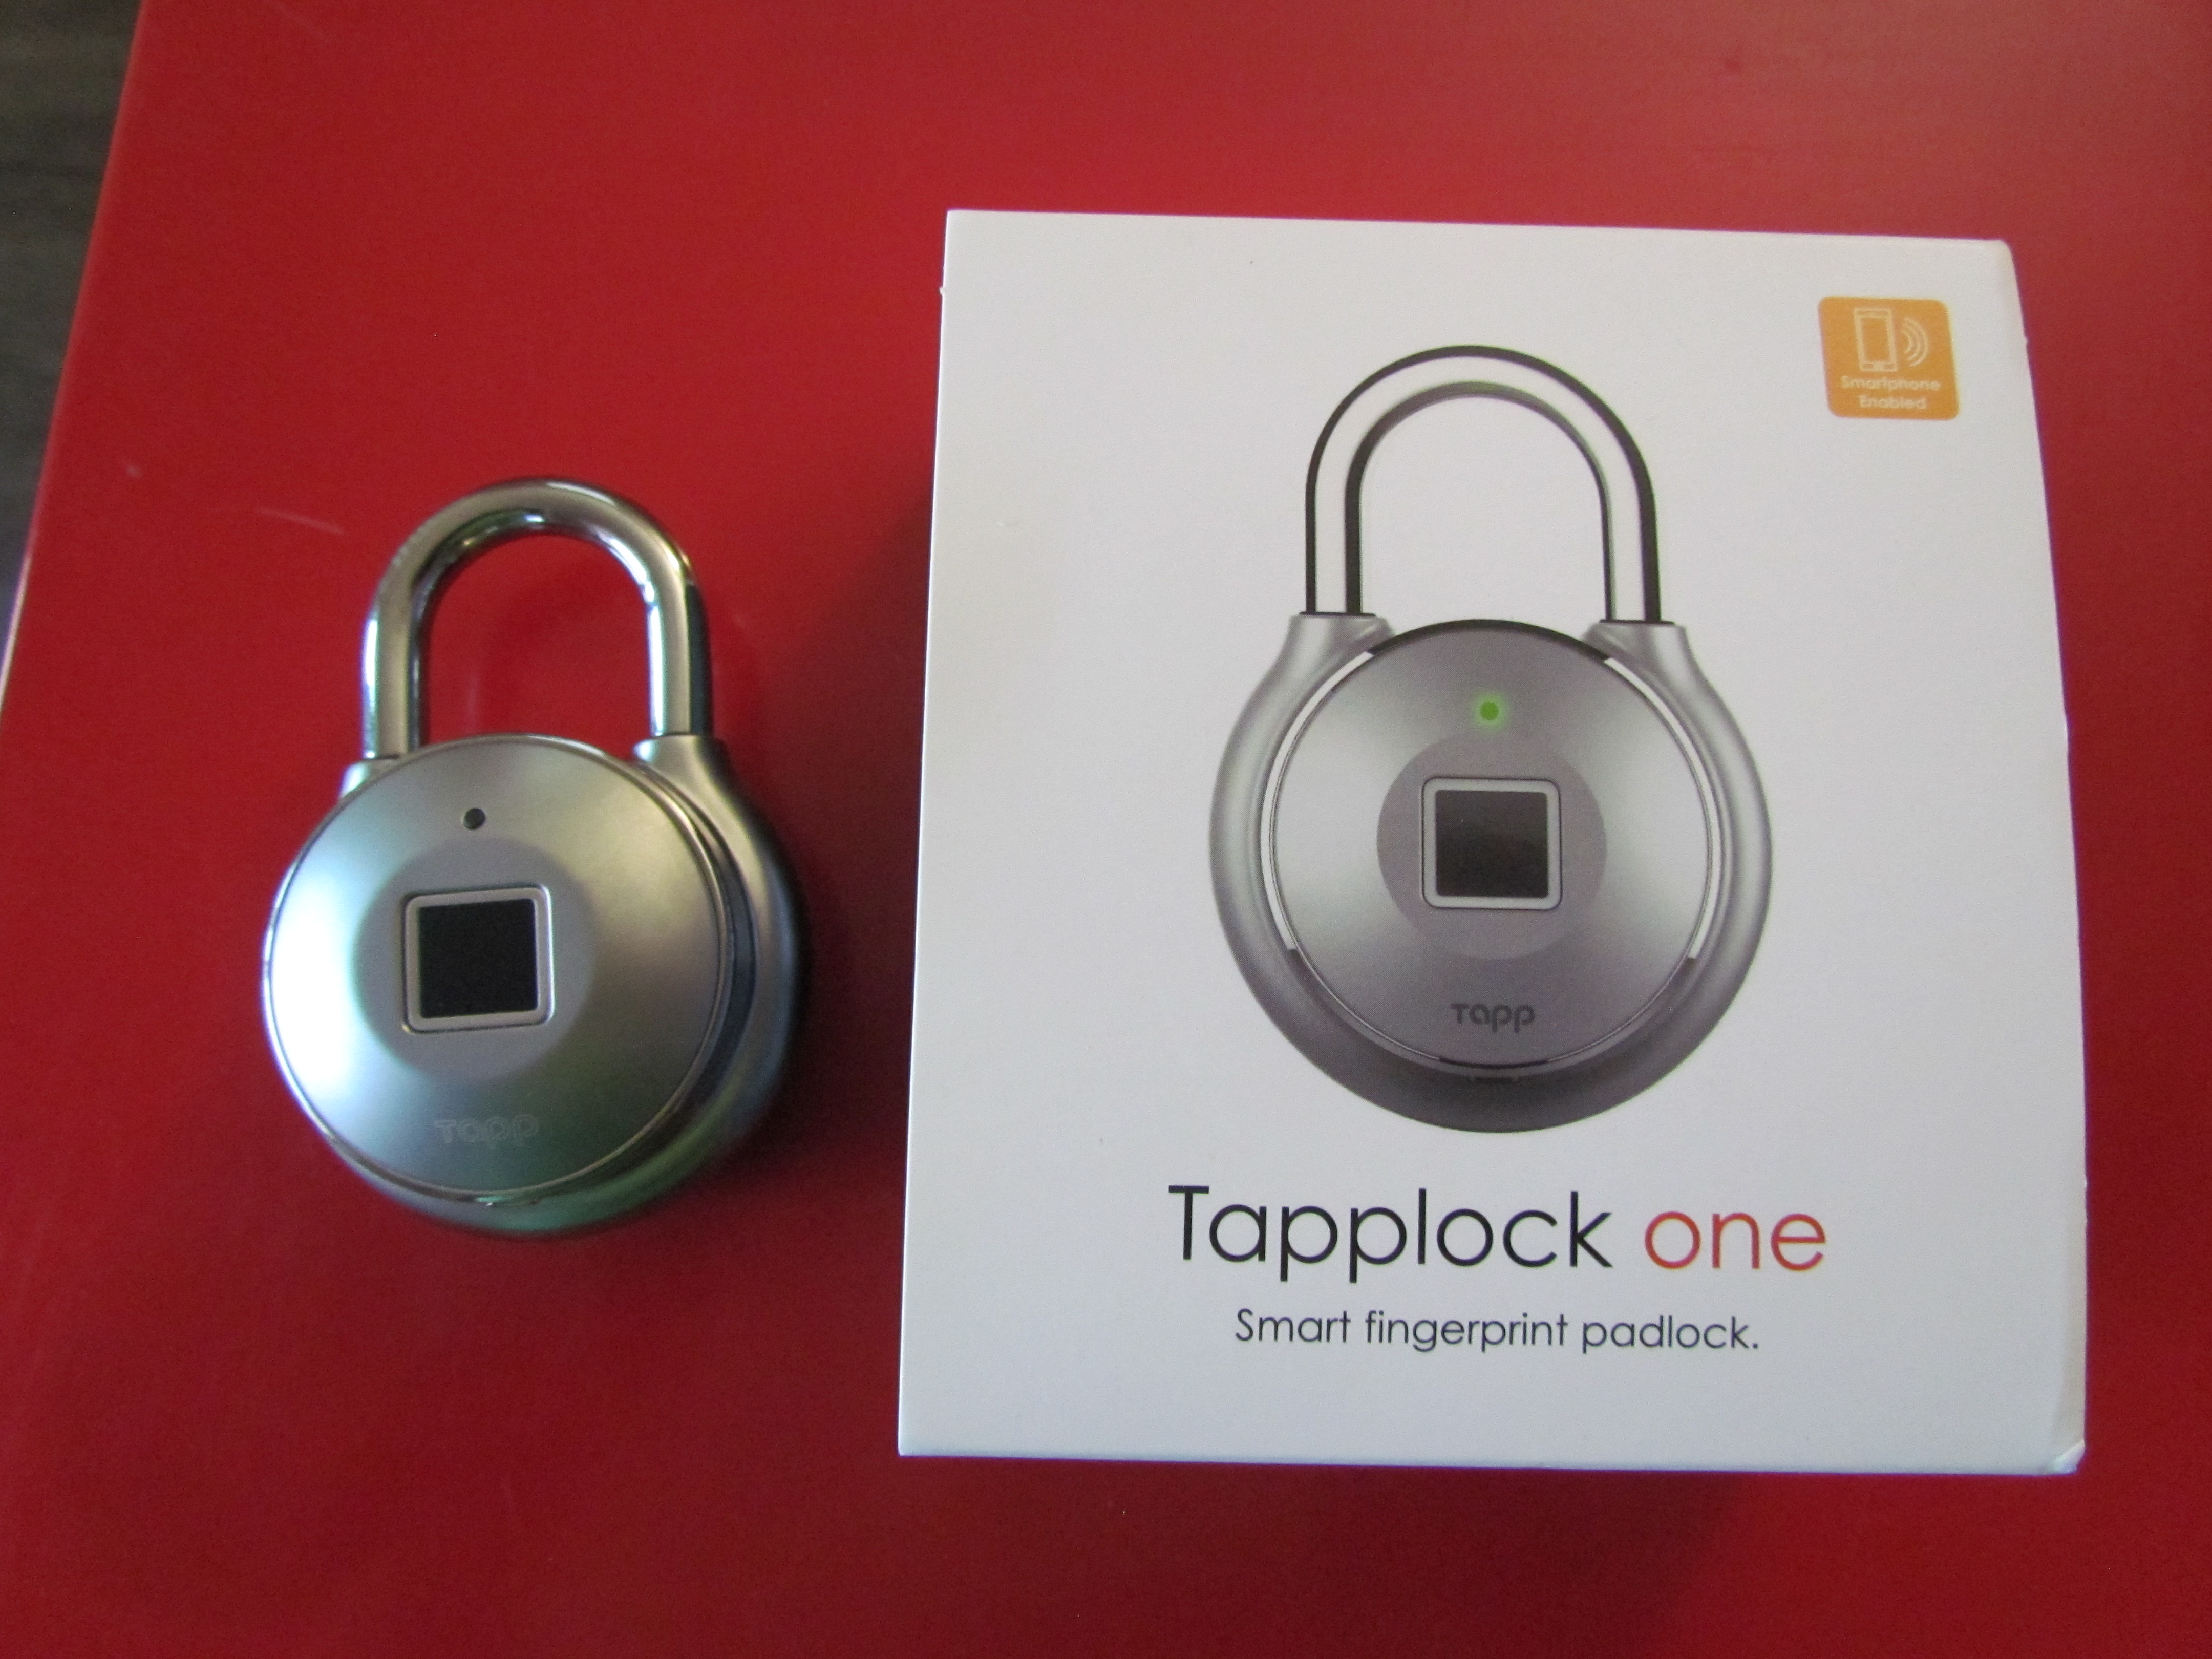 Tapplock, Fingerprint provides access to your valuables, ClassicCars.com Journal